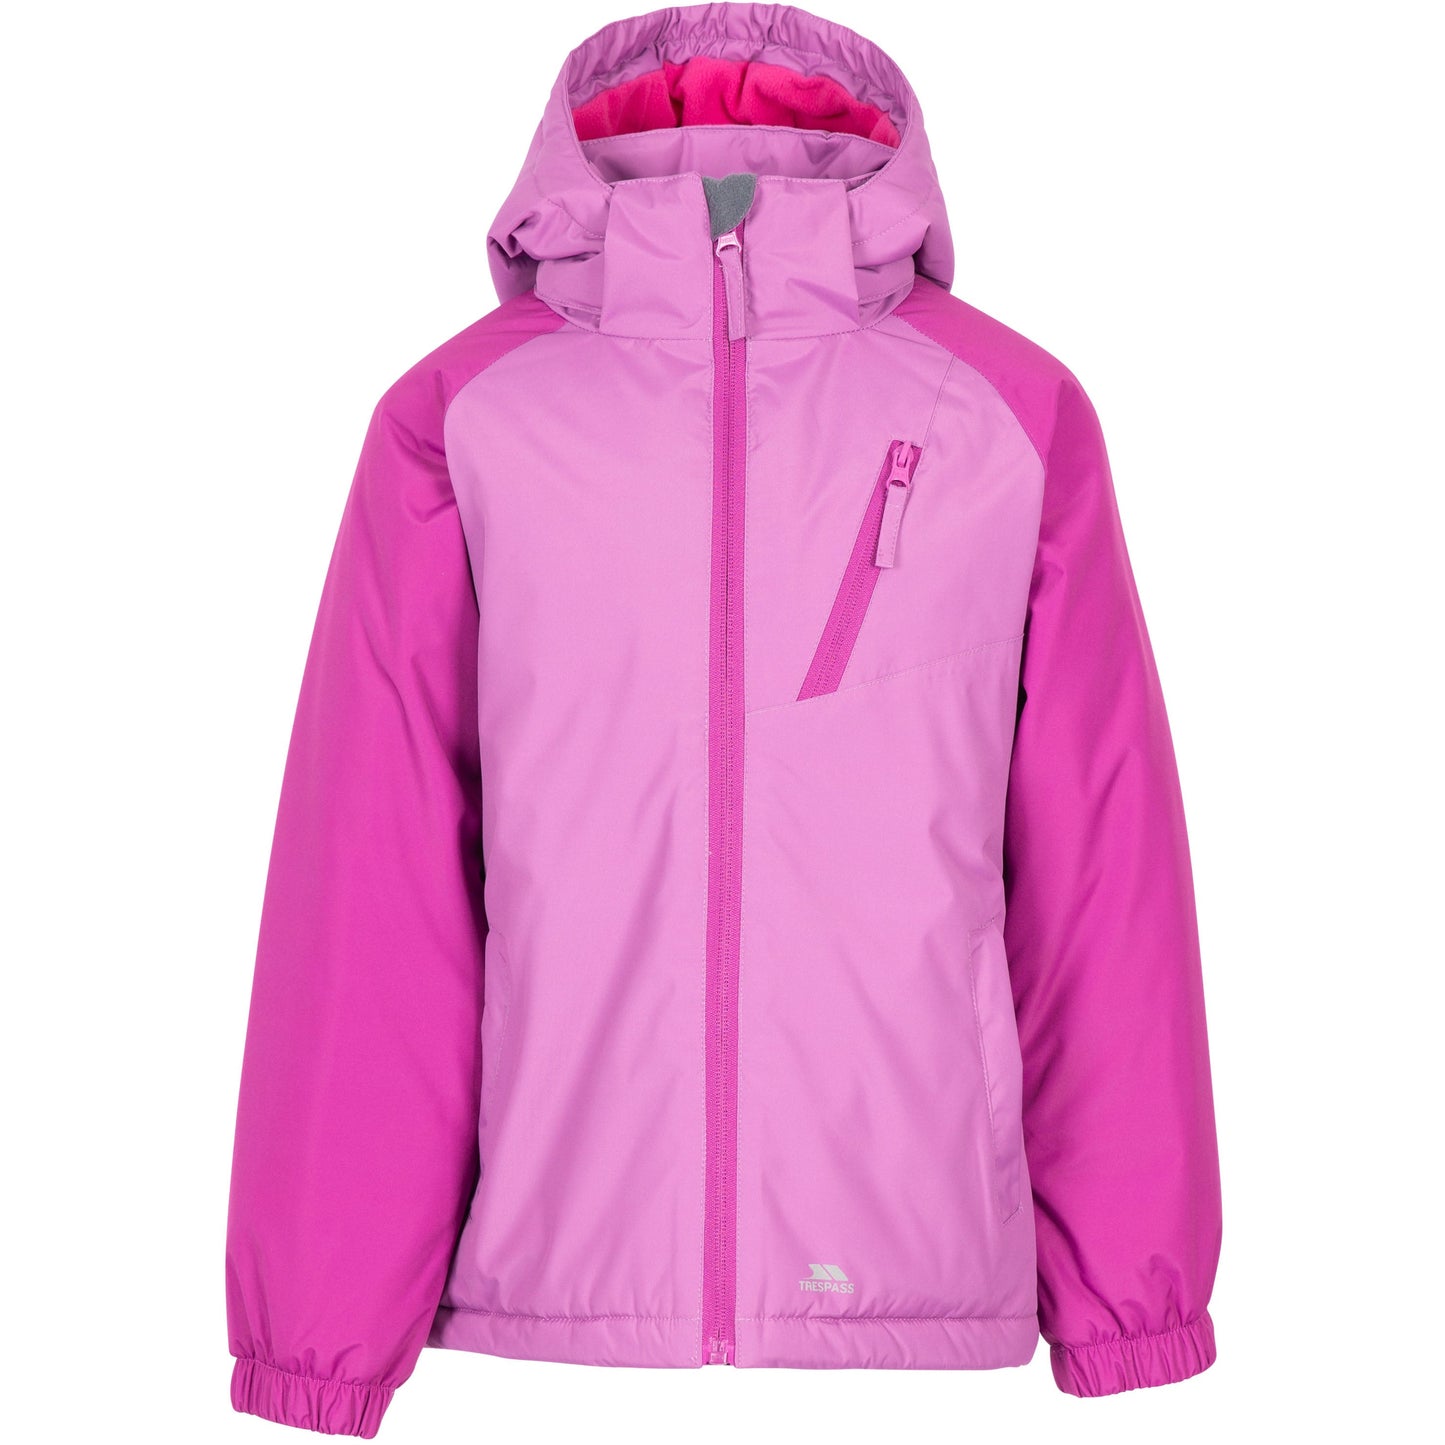 Tuneful Girls' Padded Waterproof Rain Jacket in Deep Pink